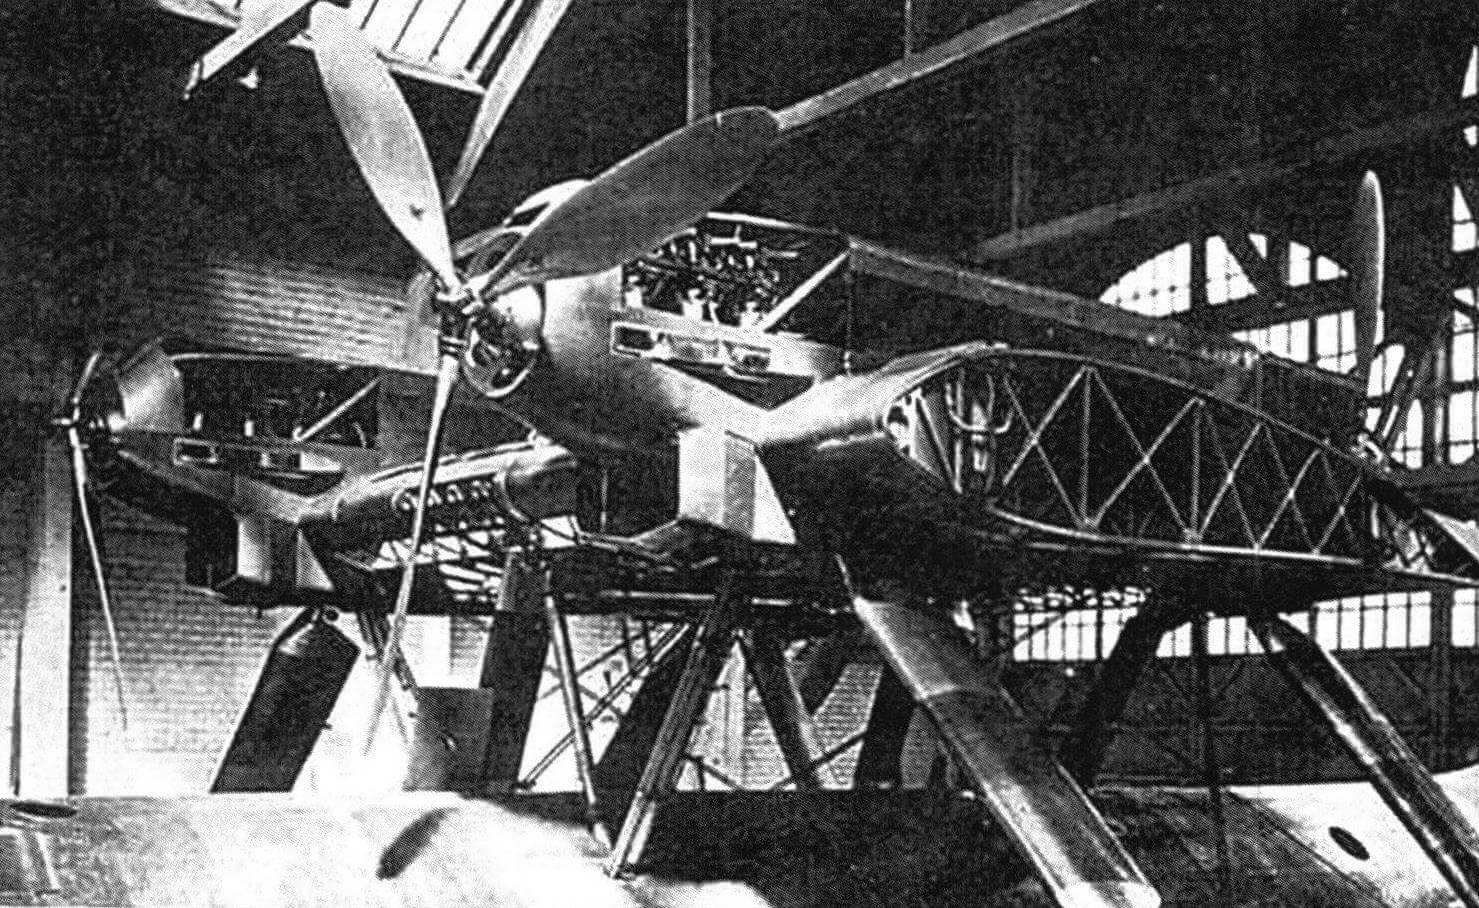 Постройка Late 300 на заводе Latecoere, на фото - центроплан и две тандемные установки моторов Hispano-Suiza 12Nbr